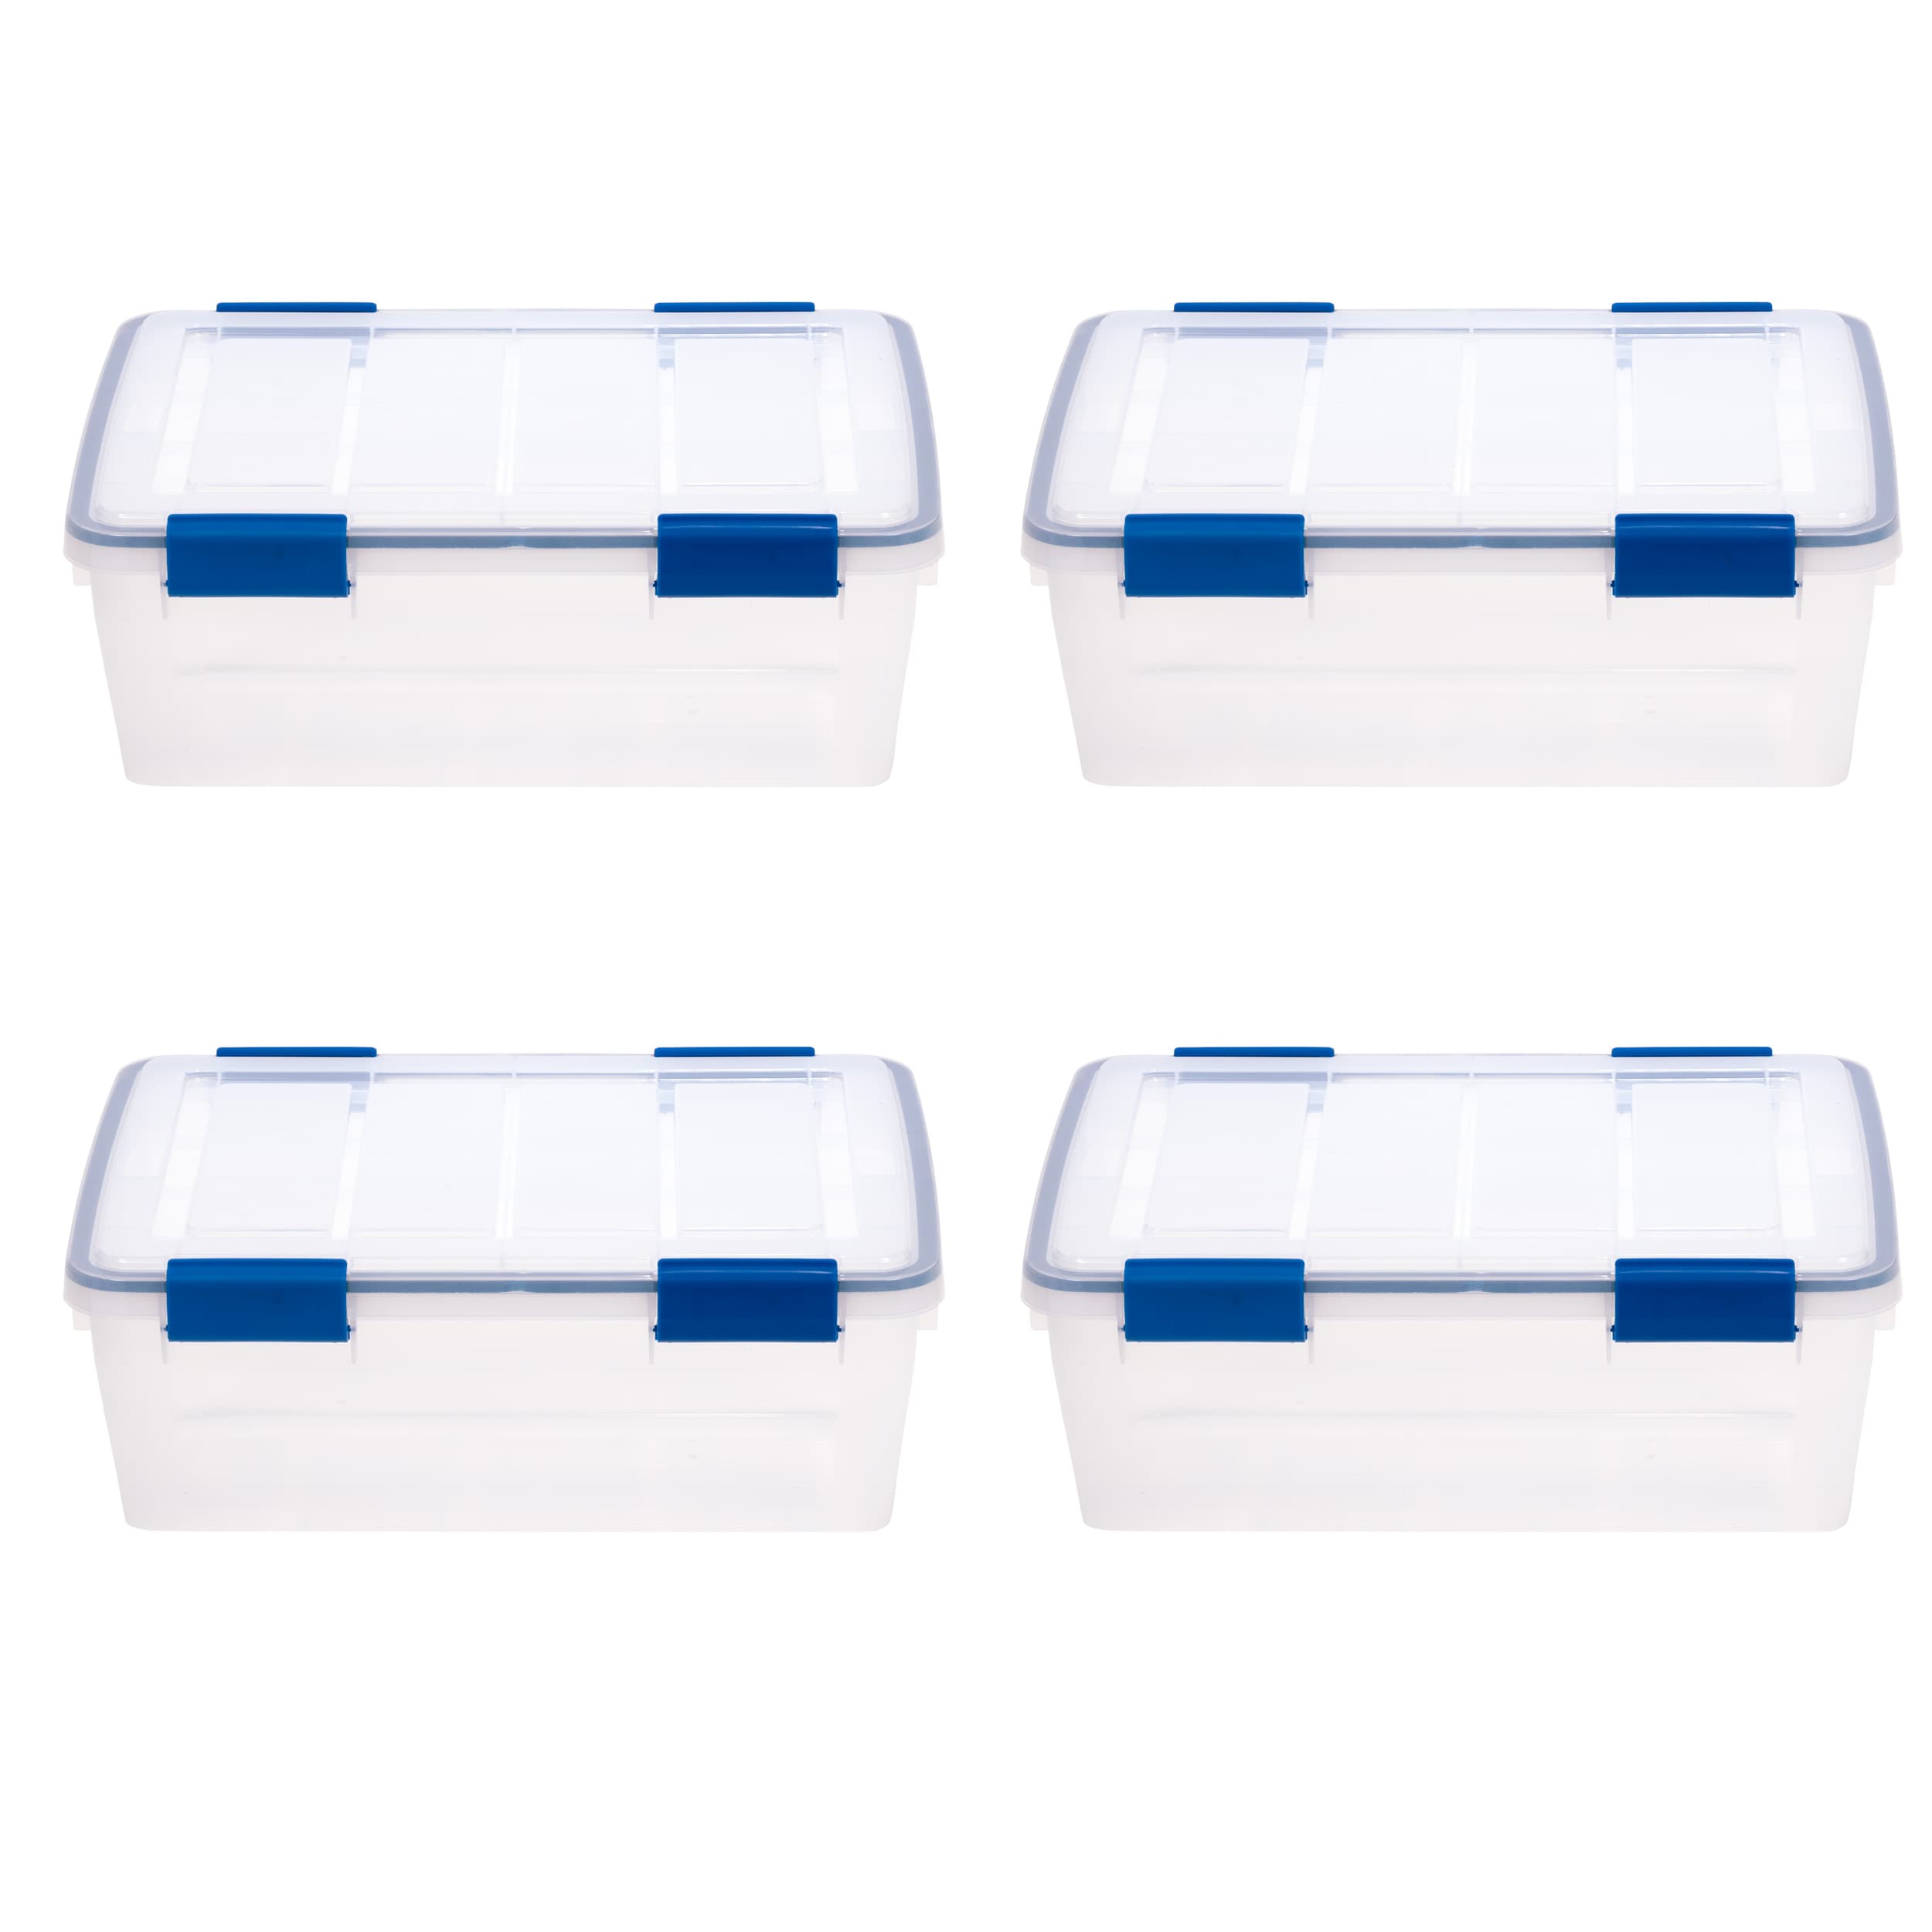 Iris 7.5 gal. Weatherpro Clear Plastic Storage Box with Blue Lid (4-Pack)